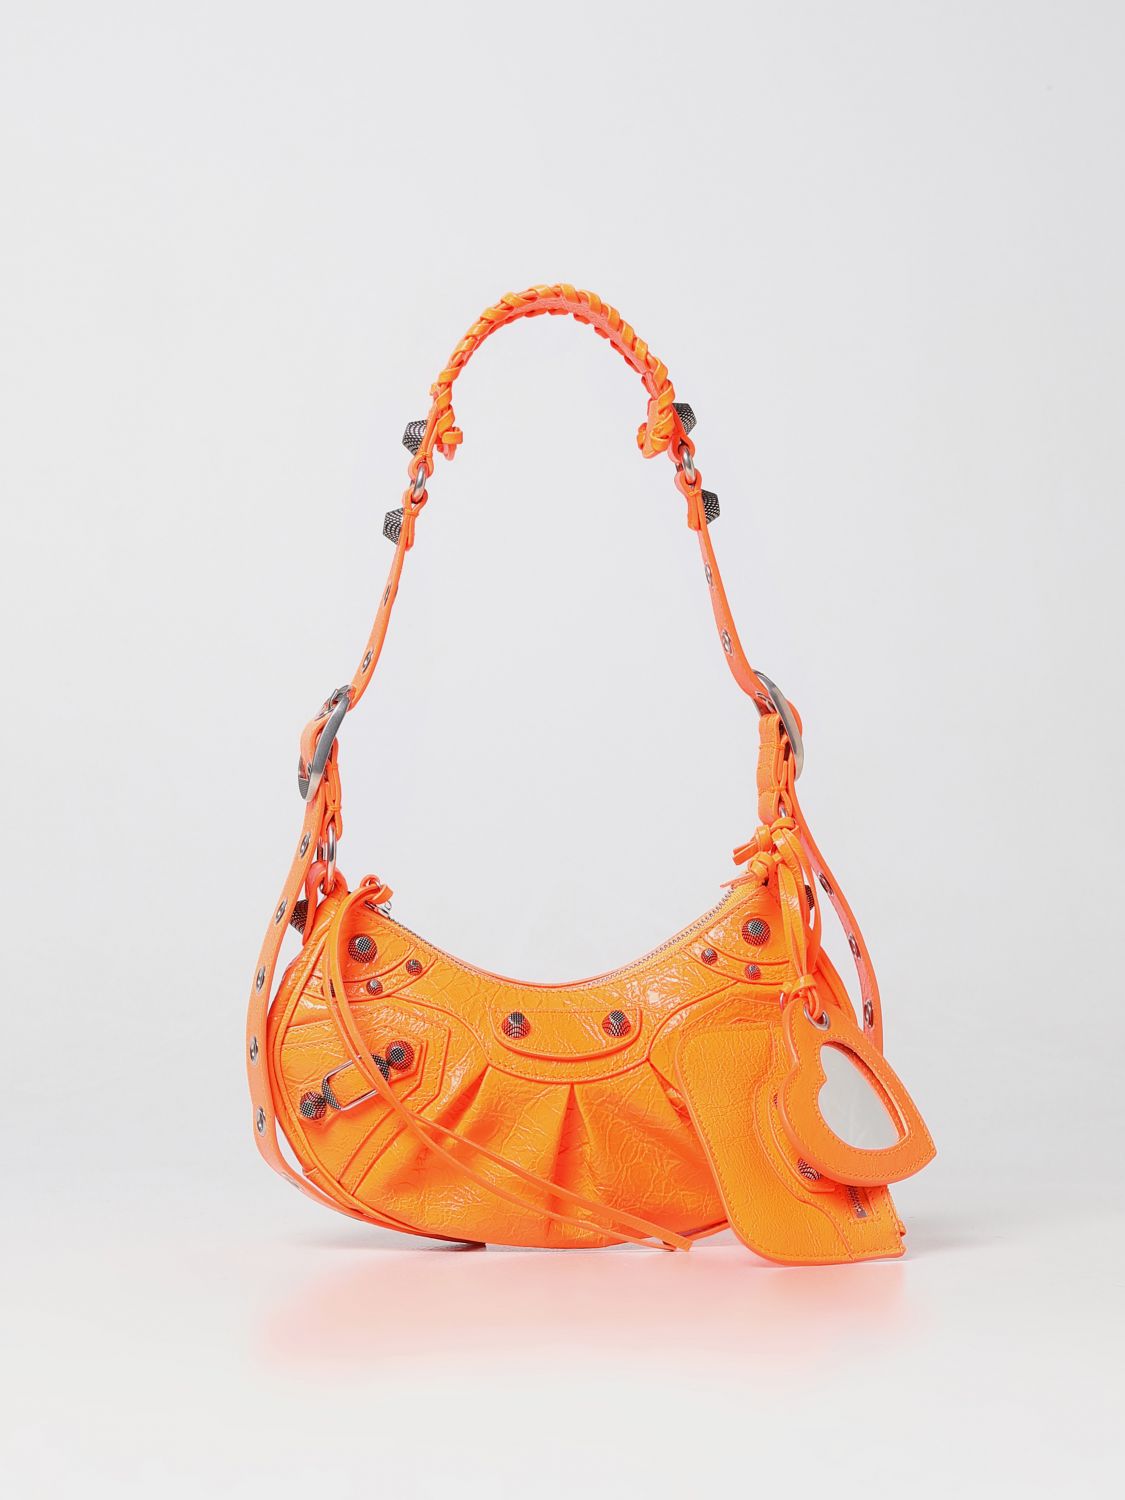 BALENCIAGA: shoulder bag woman - Orange | Balenciaga shoulder bag 6713091VGUY online on GIGLIO.COM